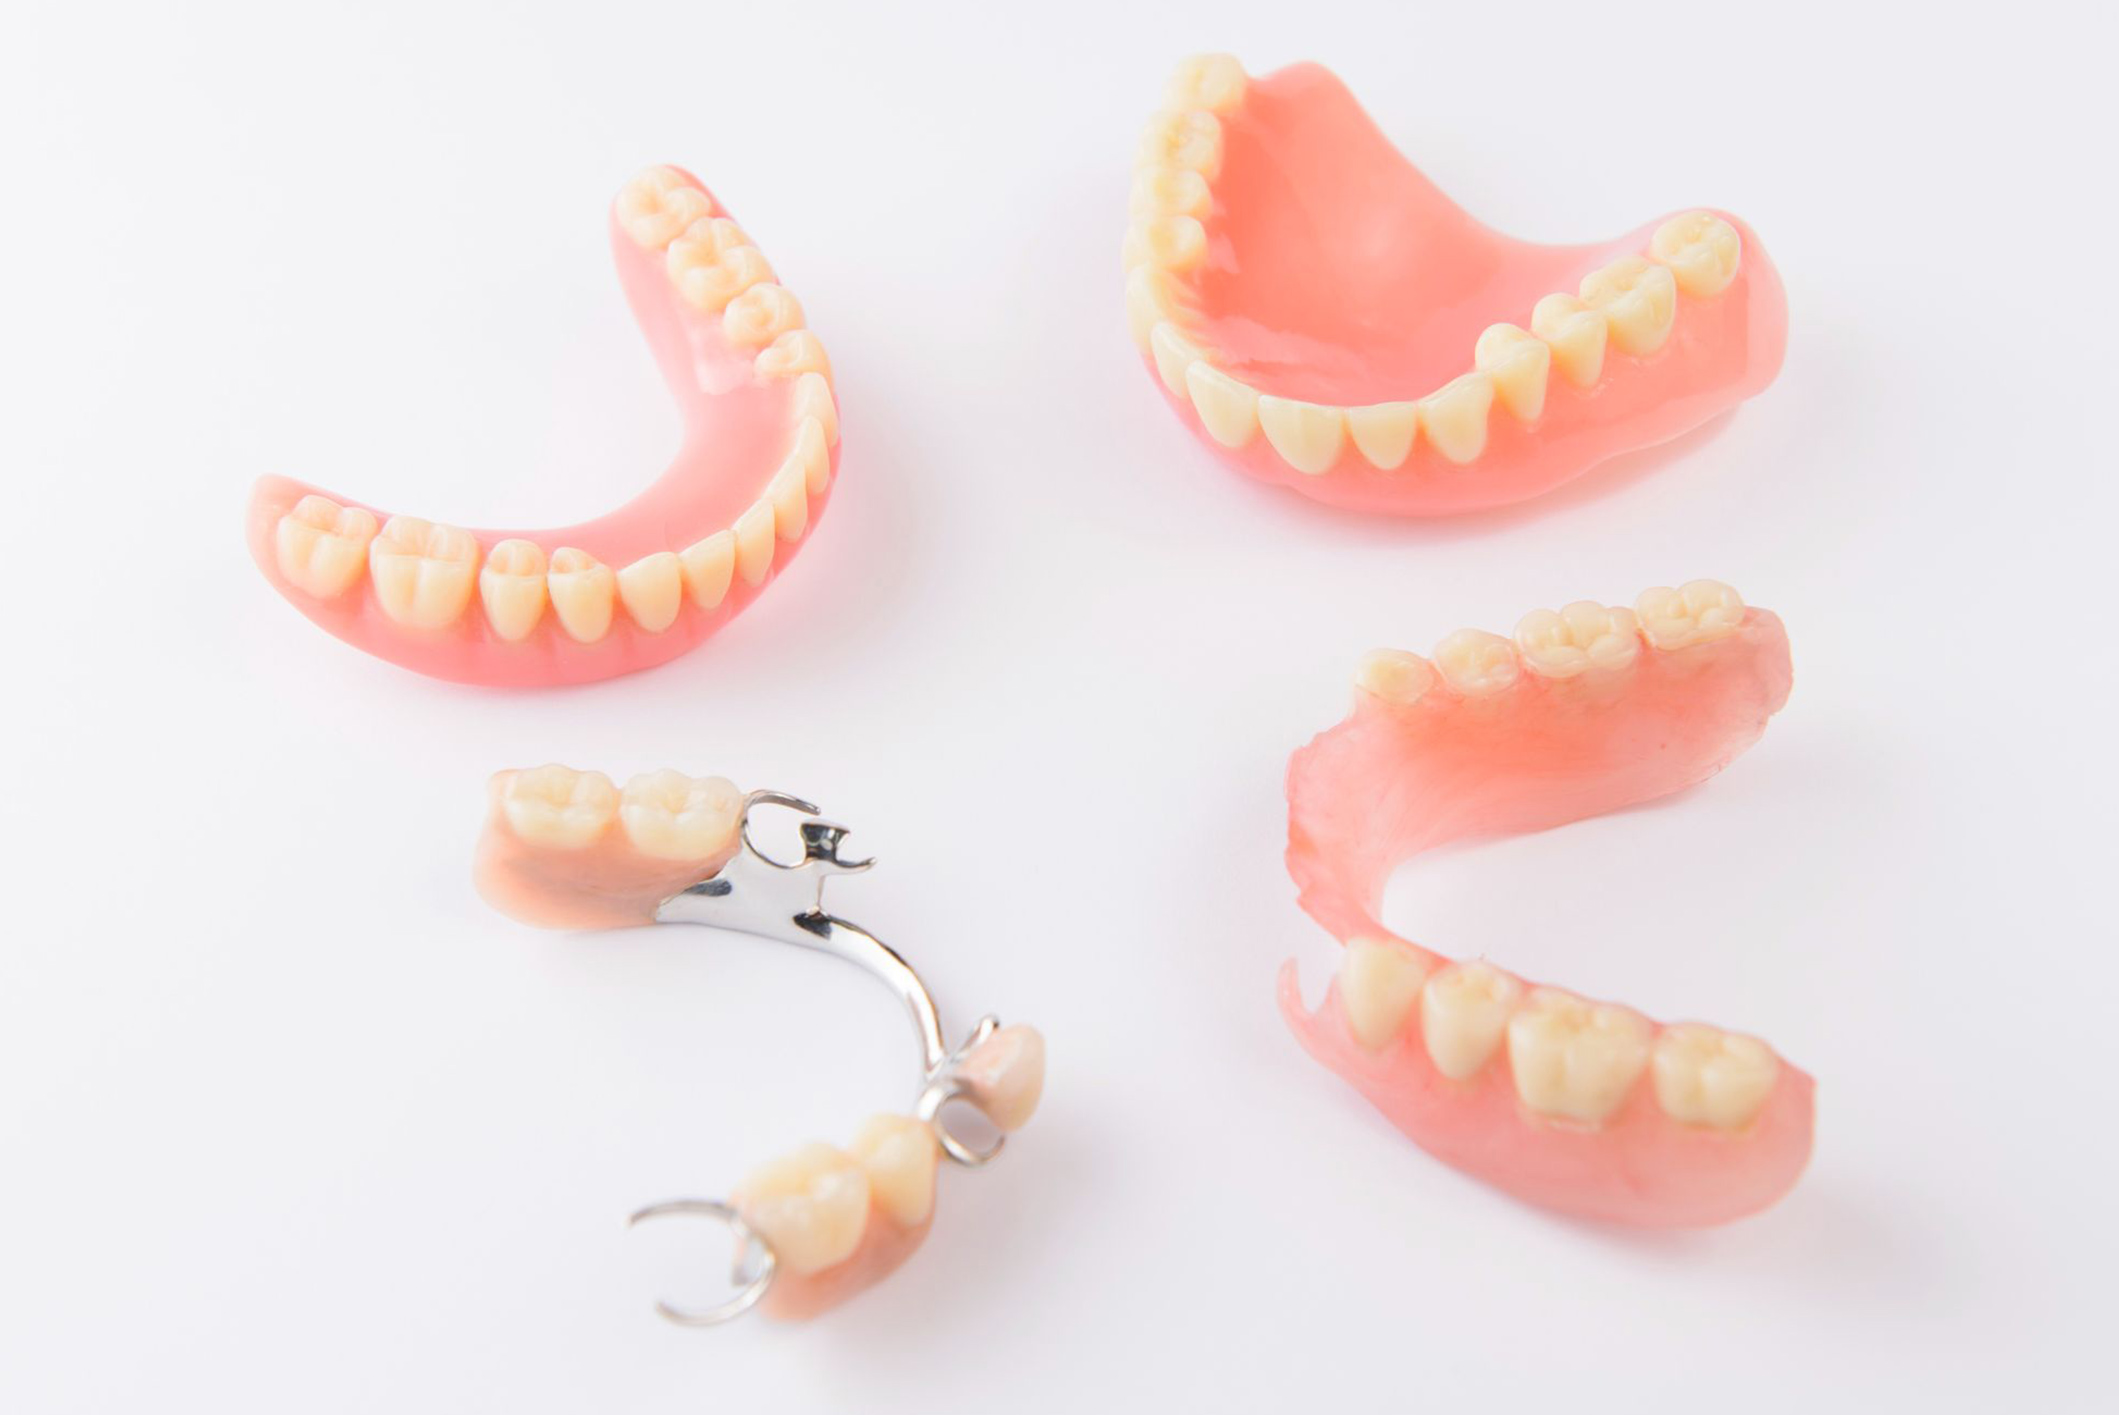 Dentures and Dental Implants